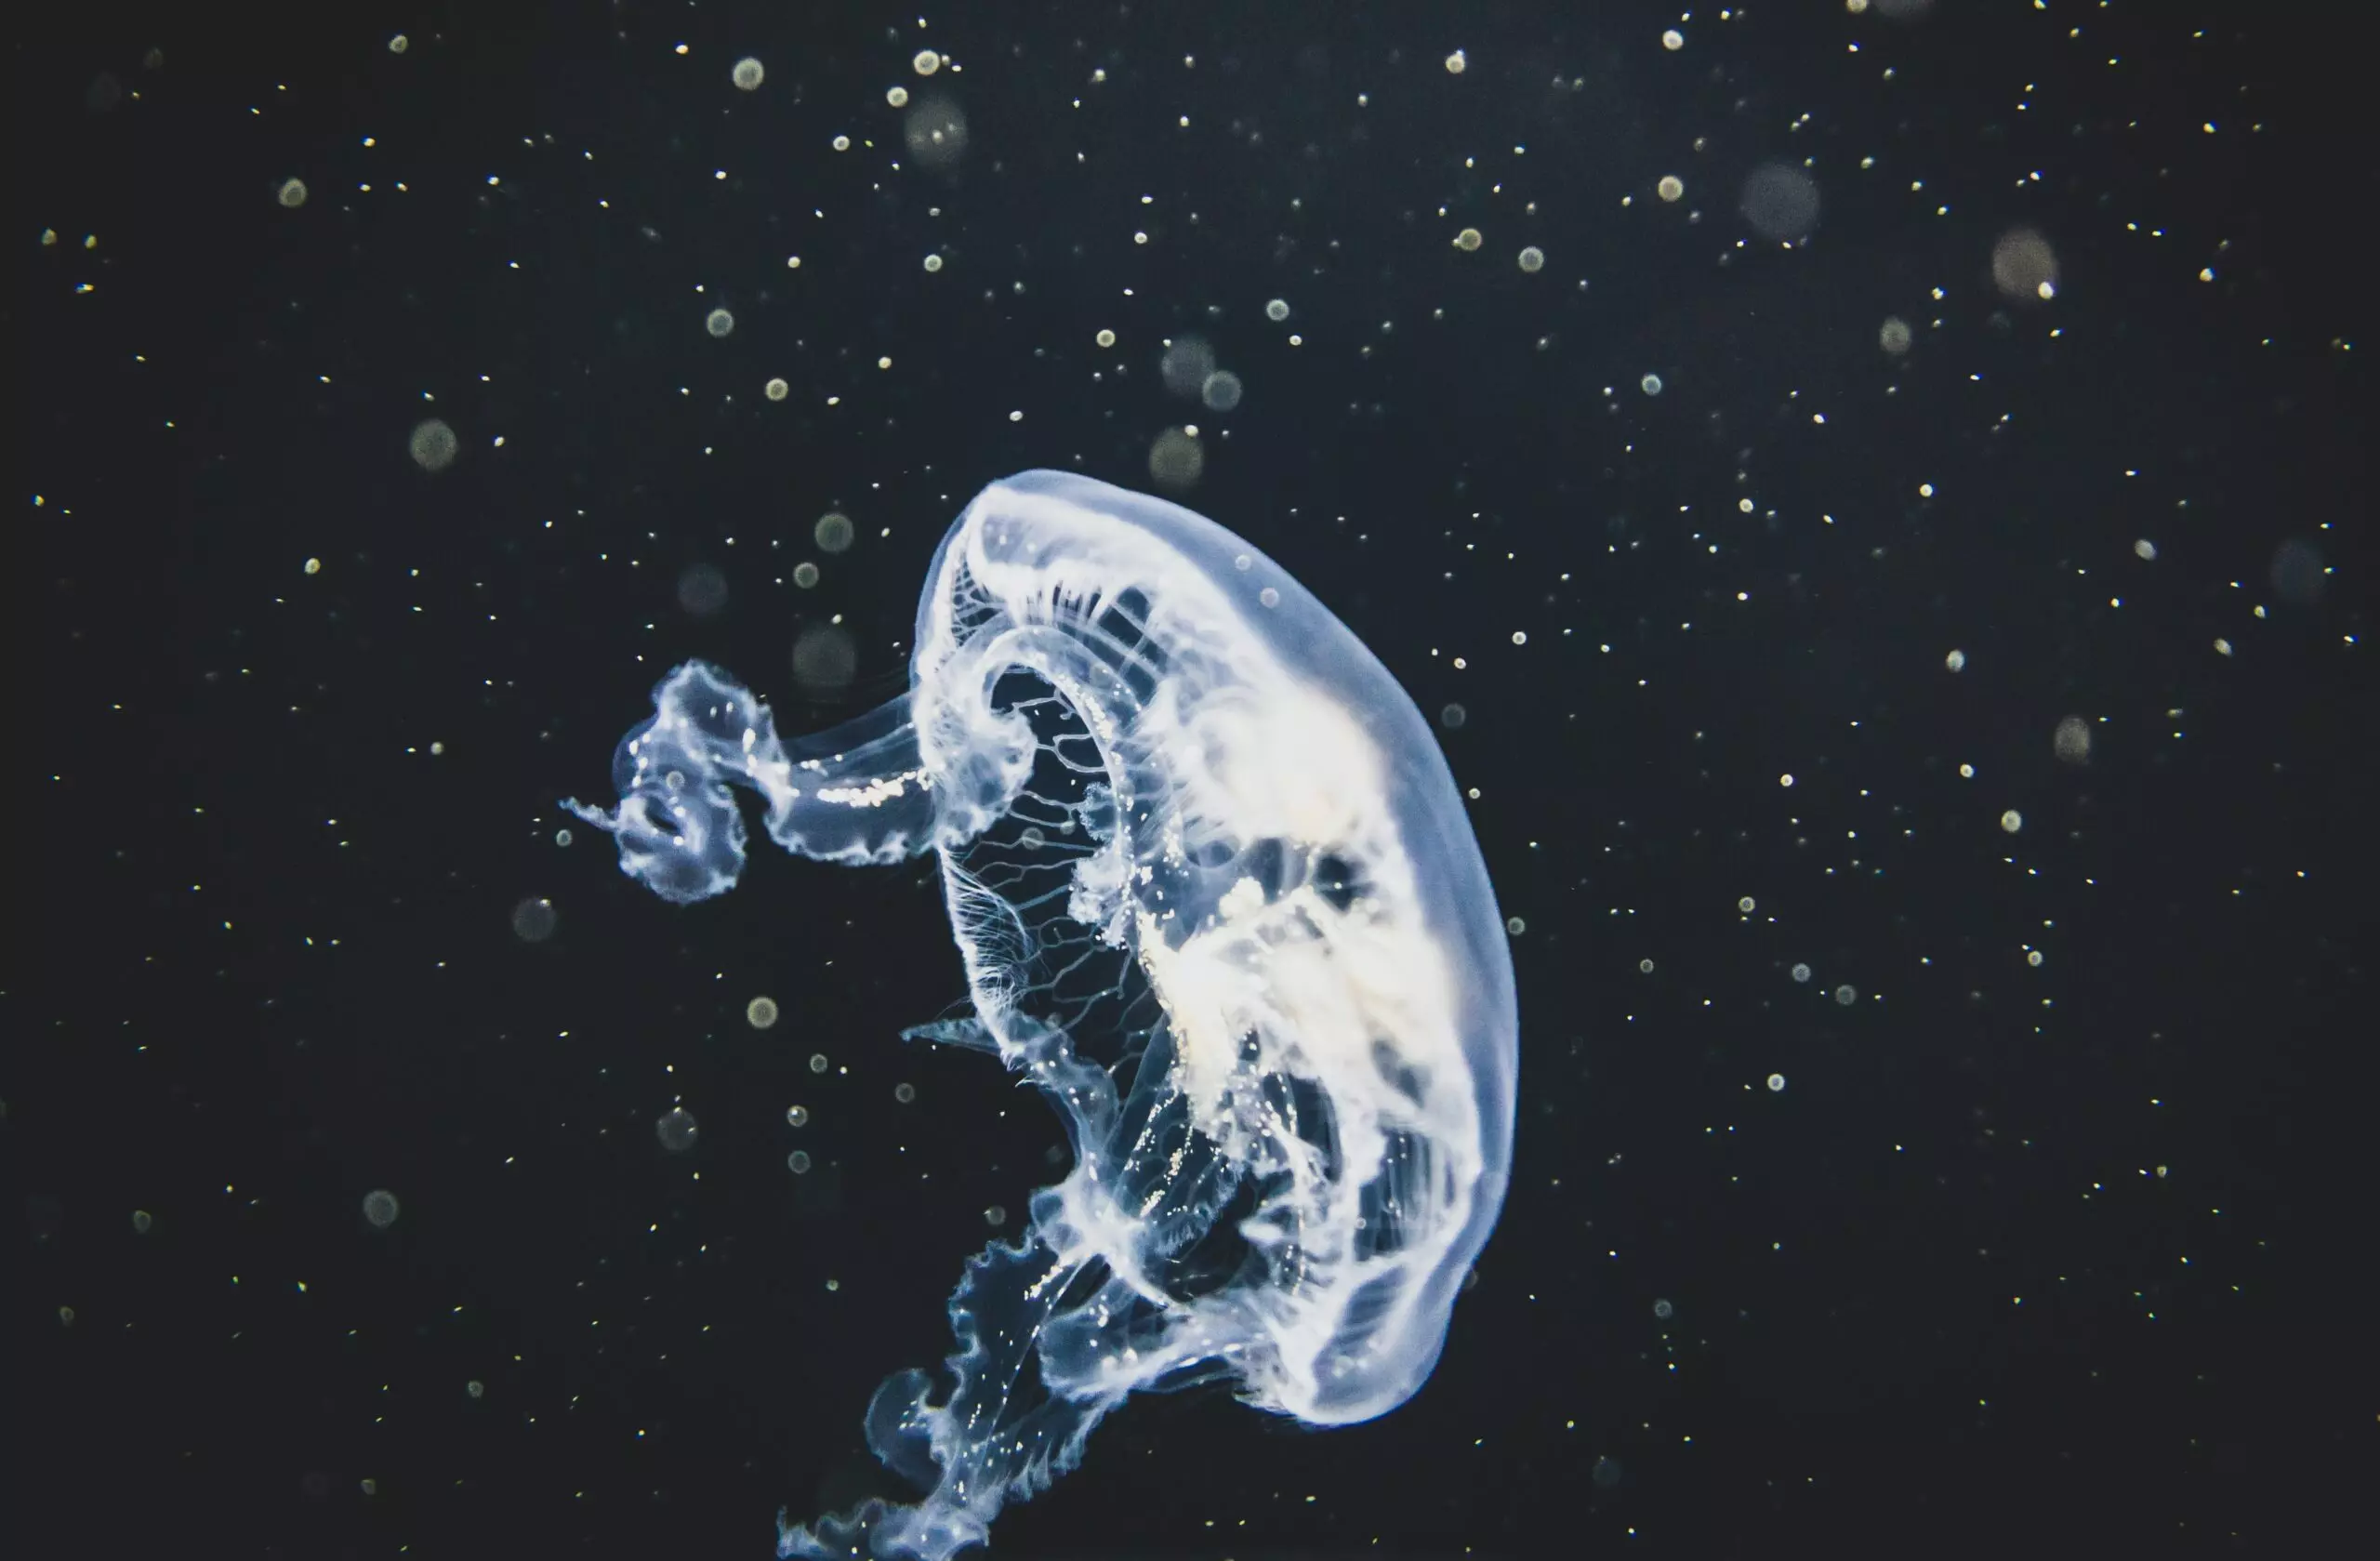 Baptist University, 24-eyed poisonous jellyfish discovered in China